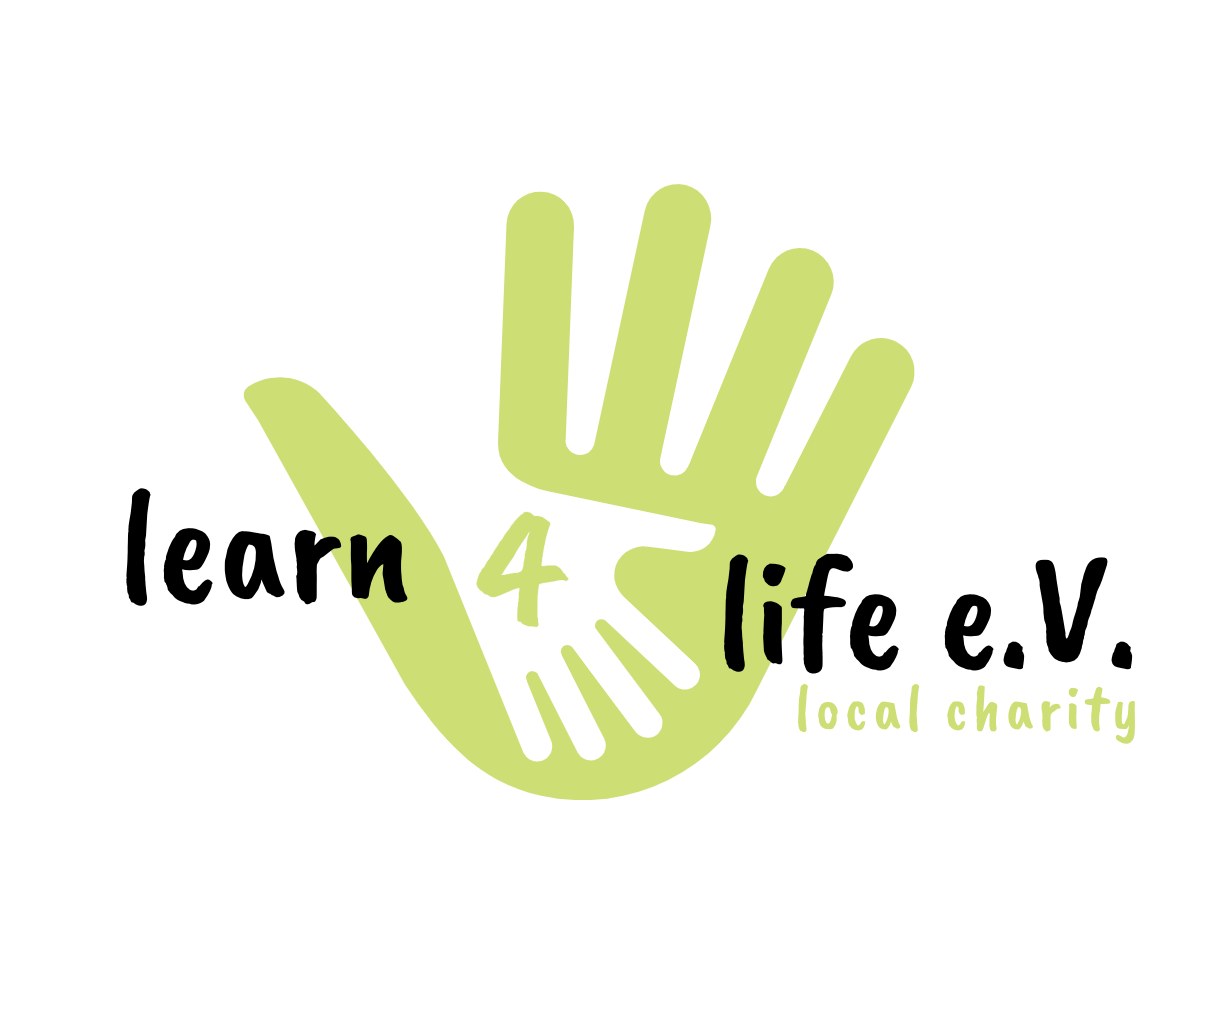 learn4life e.V.